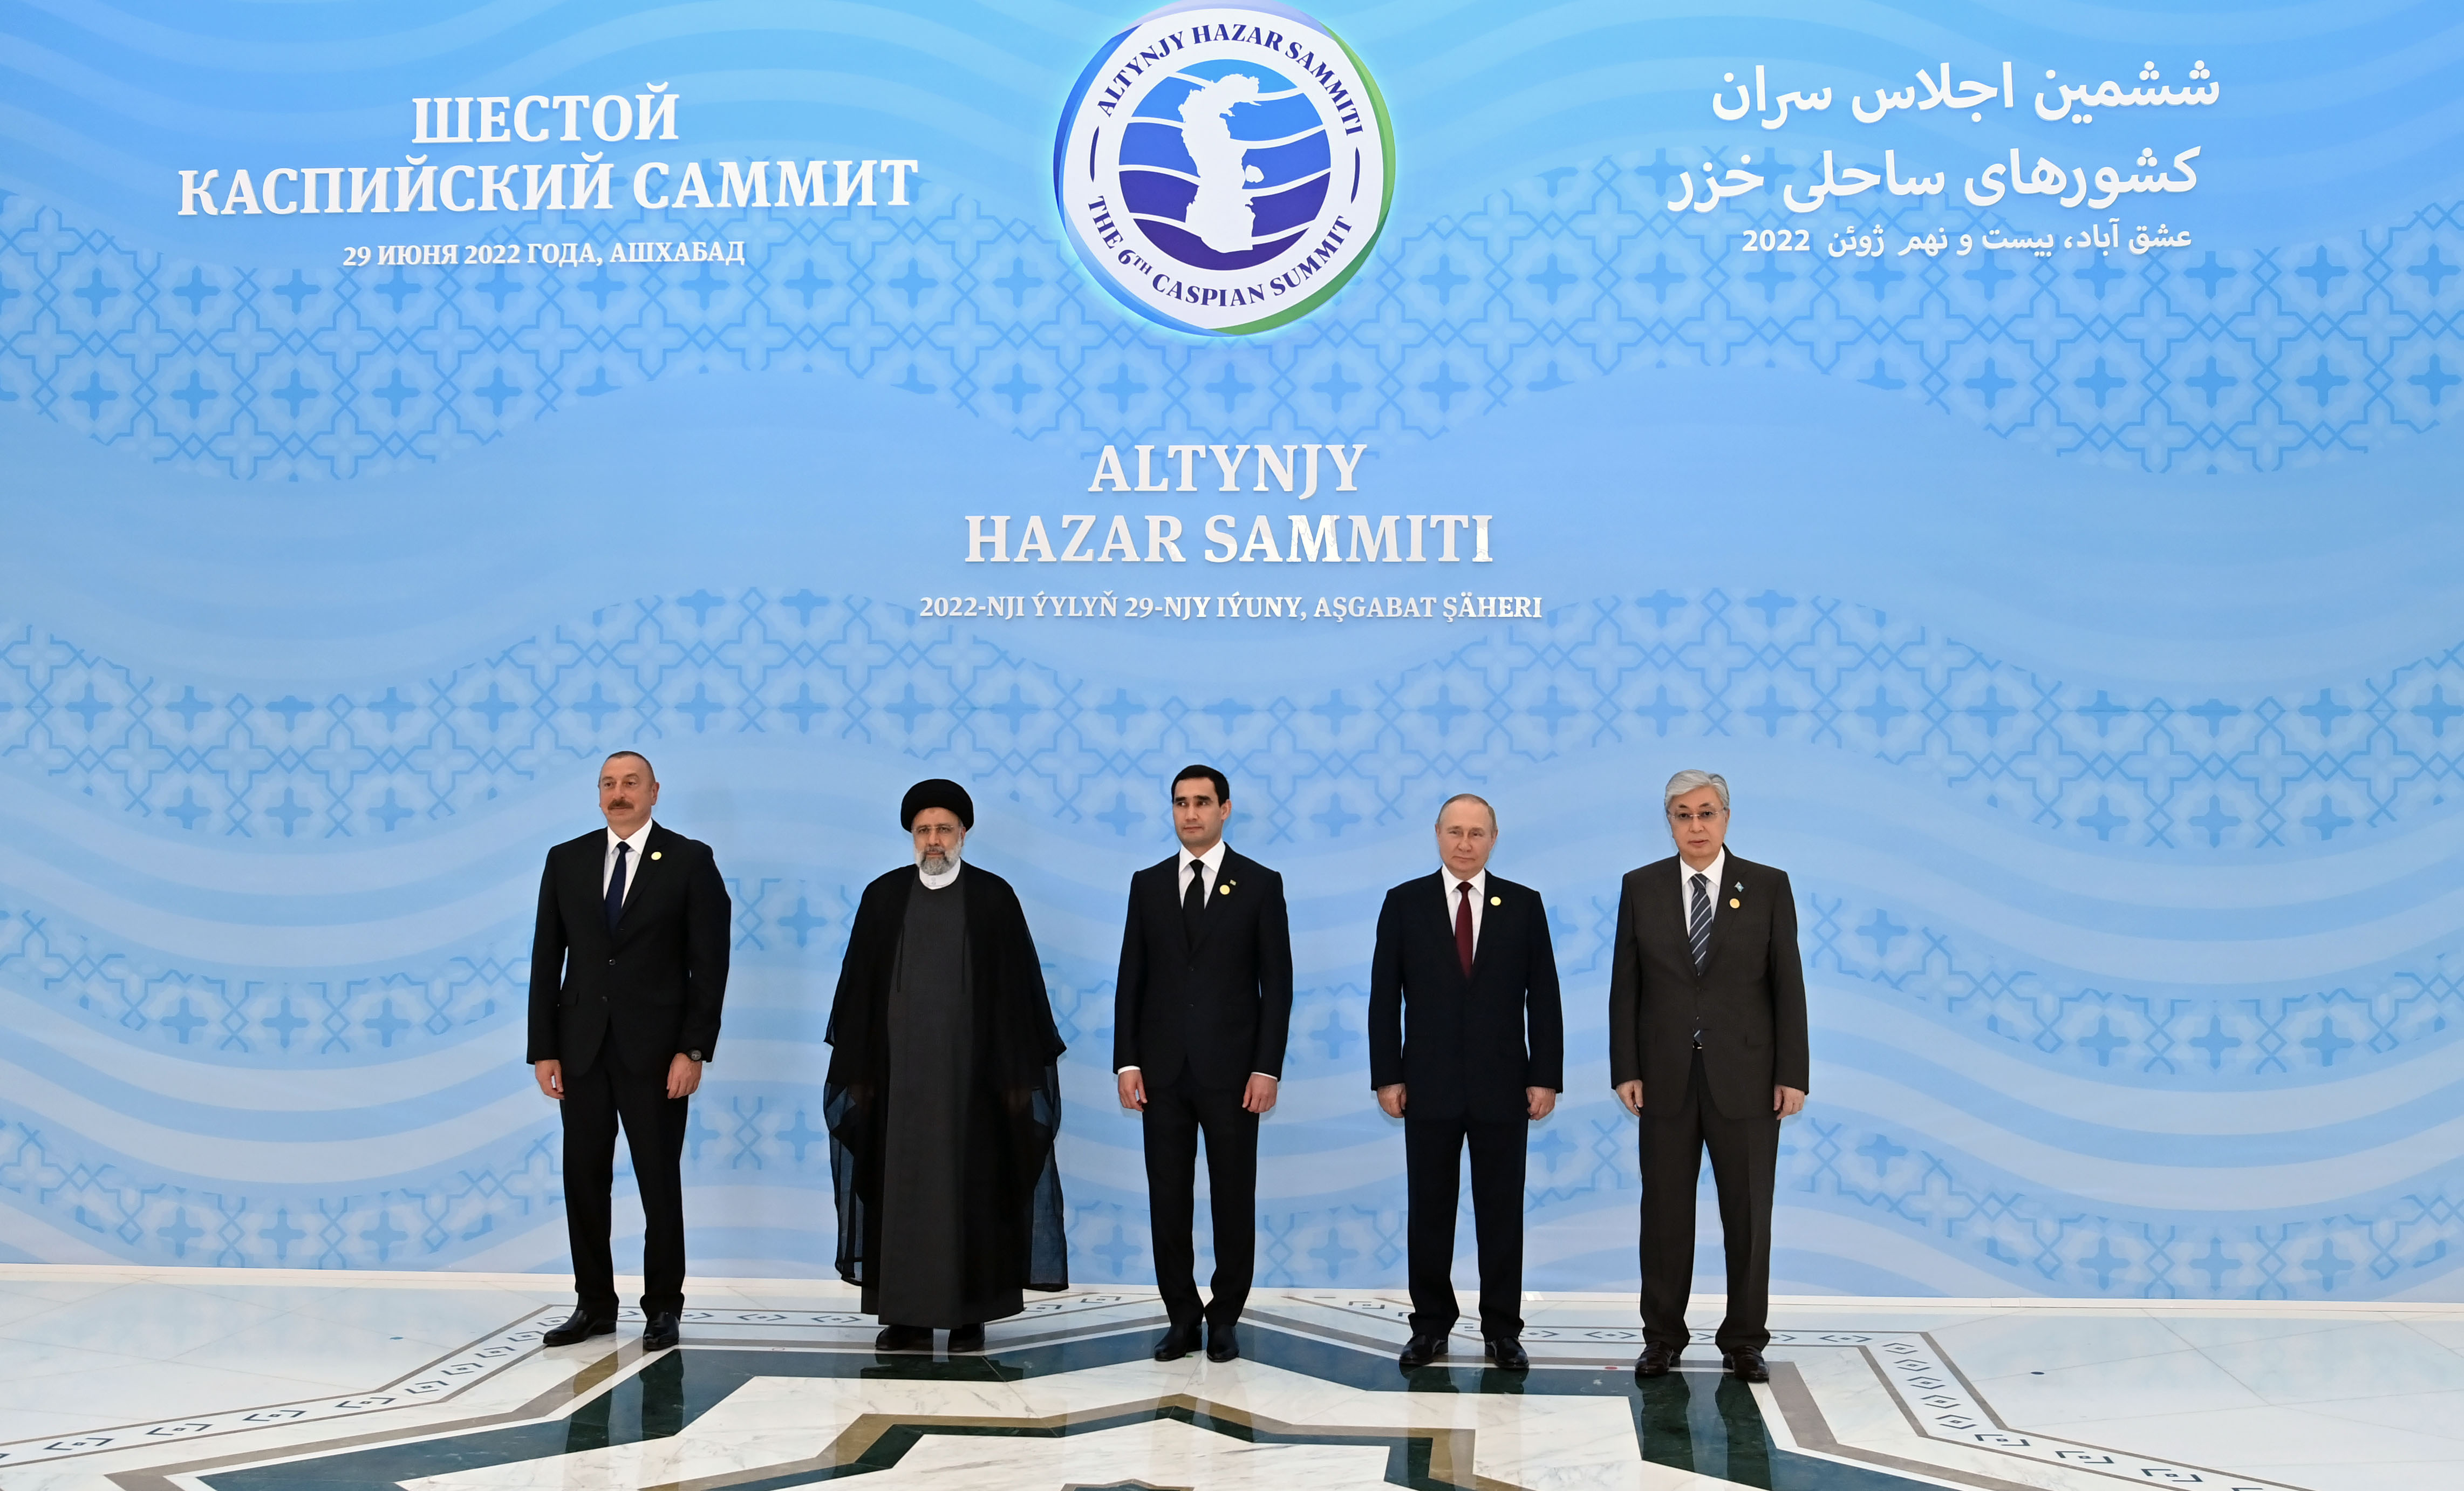 President of Kazakhstan took part in the Sixth Caspian Summit